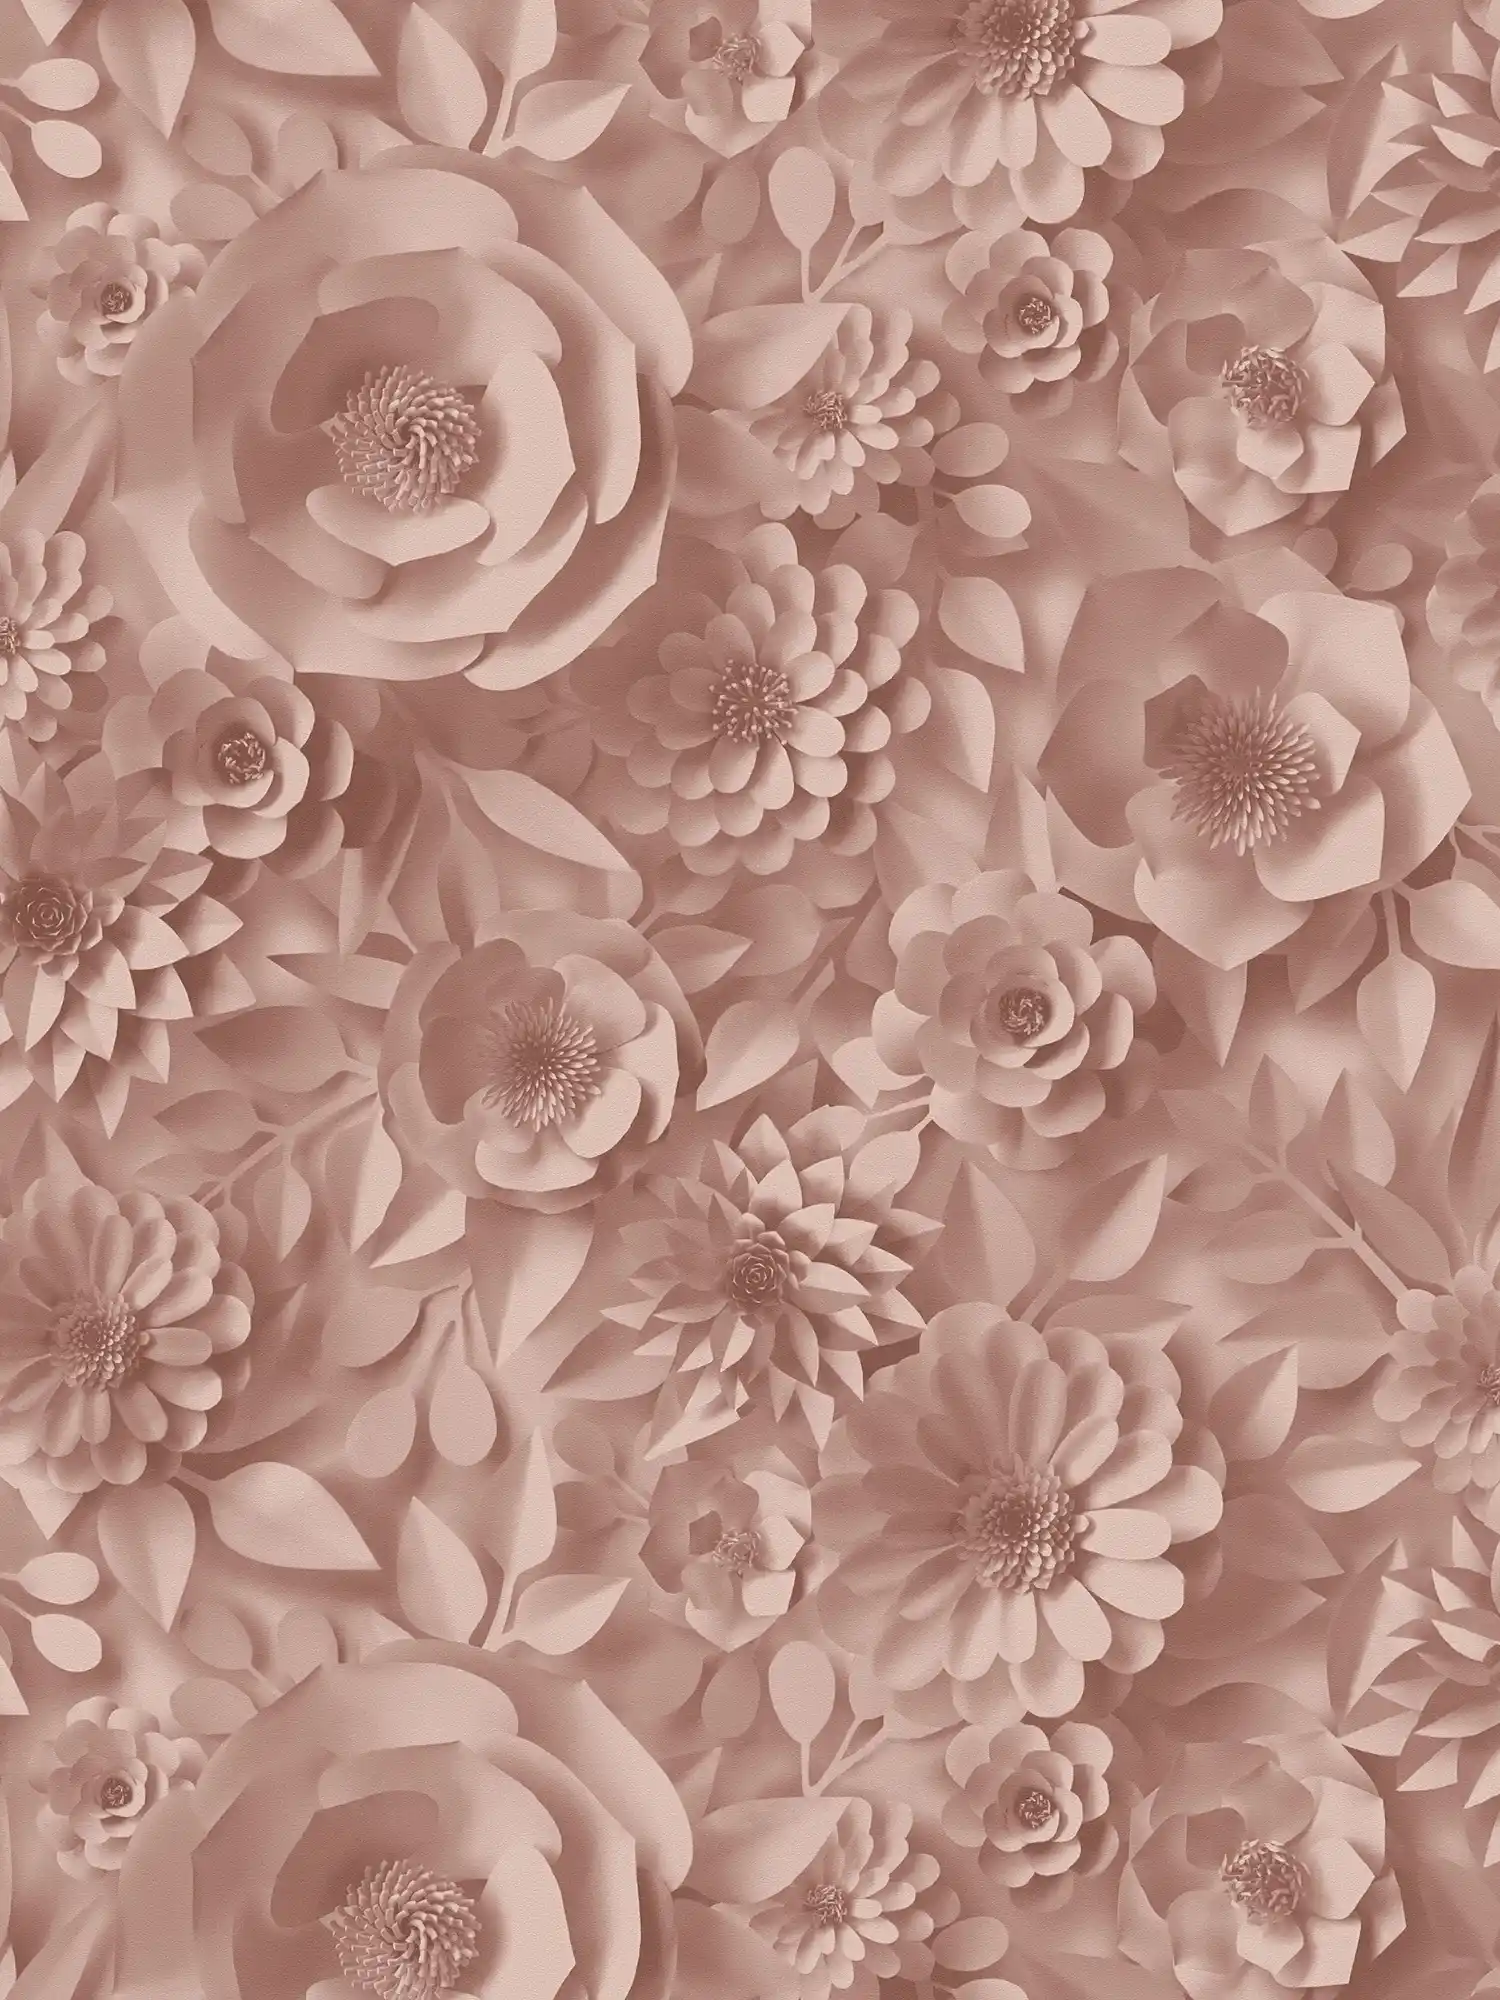 3D Tapete mit Papierblumen, Grafik Blüten-Muster – Rosa
